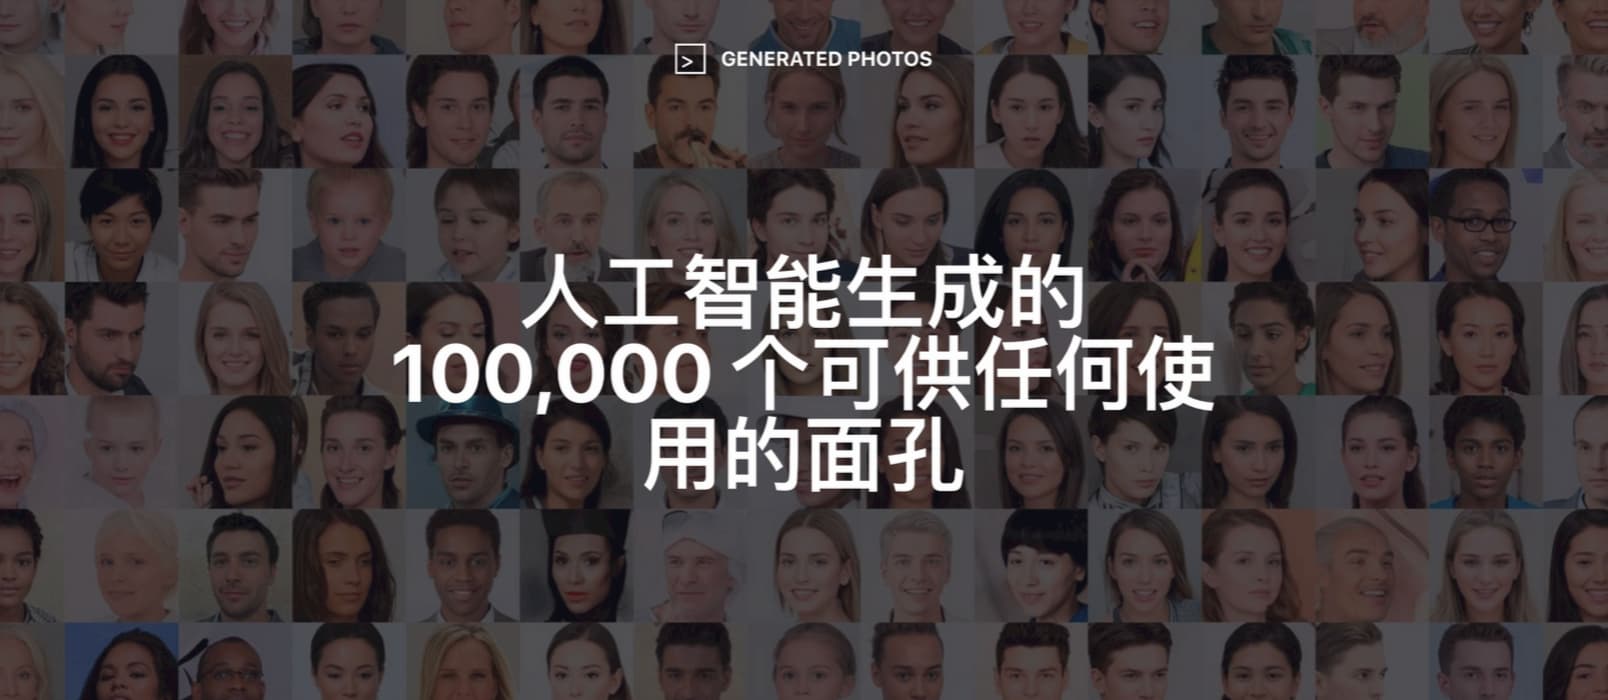 100,000 Faces - 10万张不要肖像权的人脸照片，随便用 1